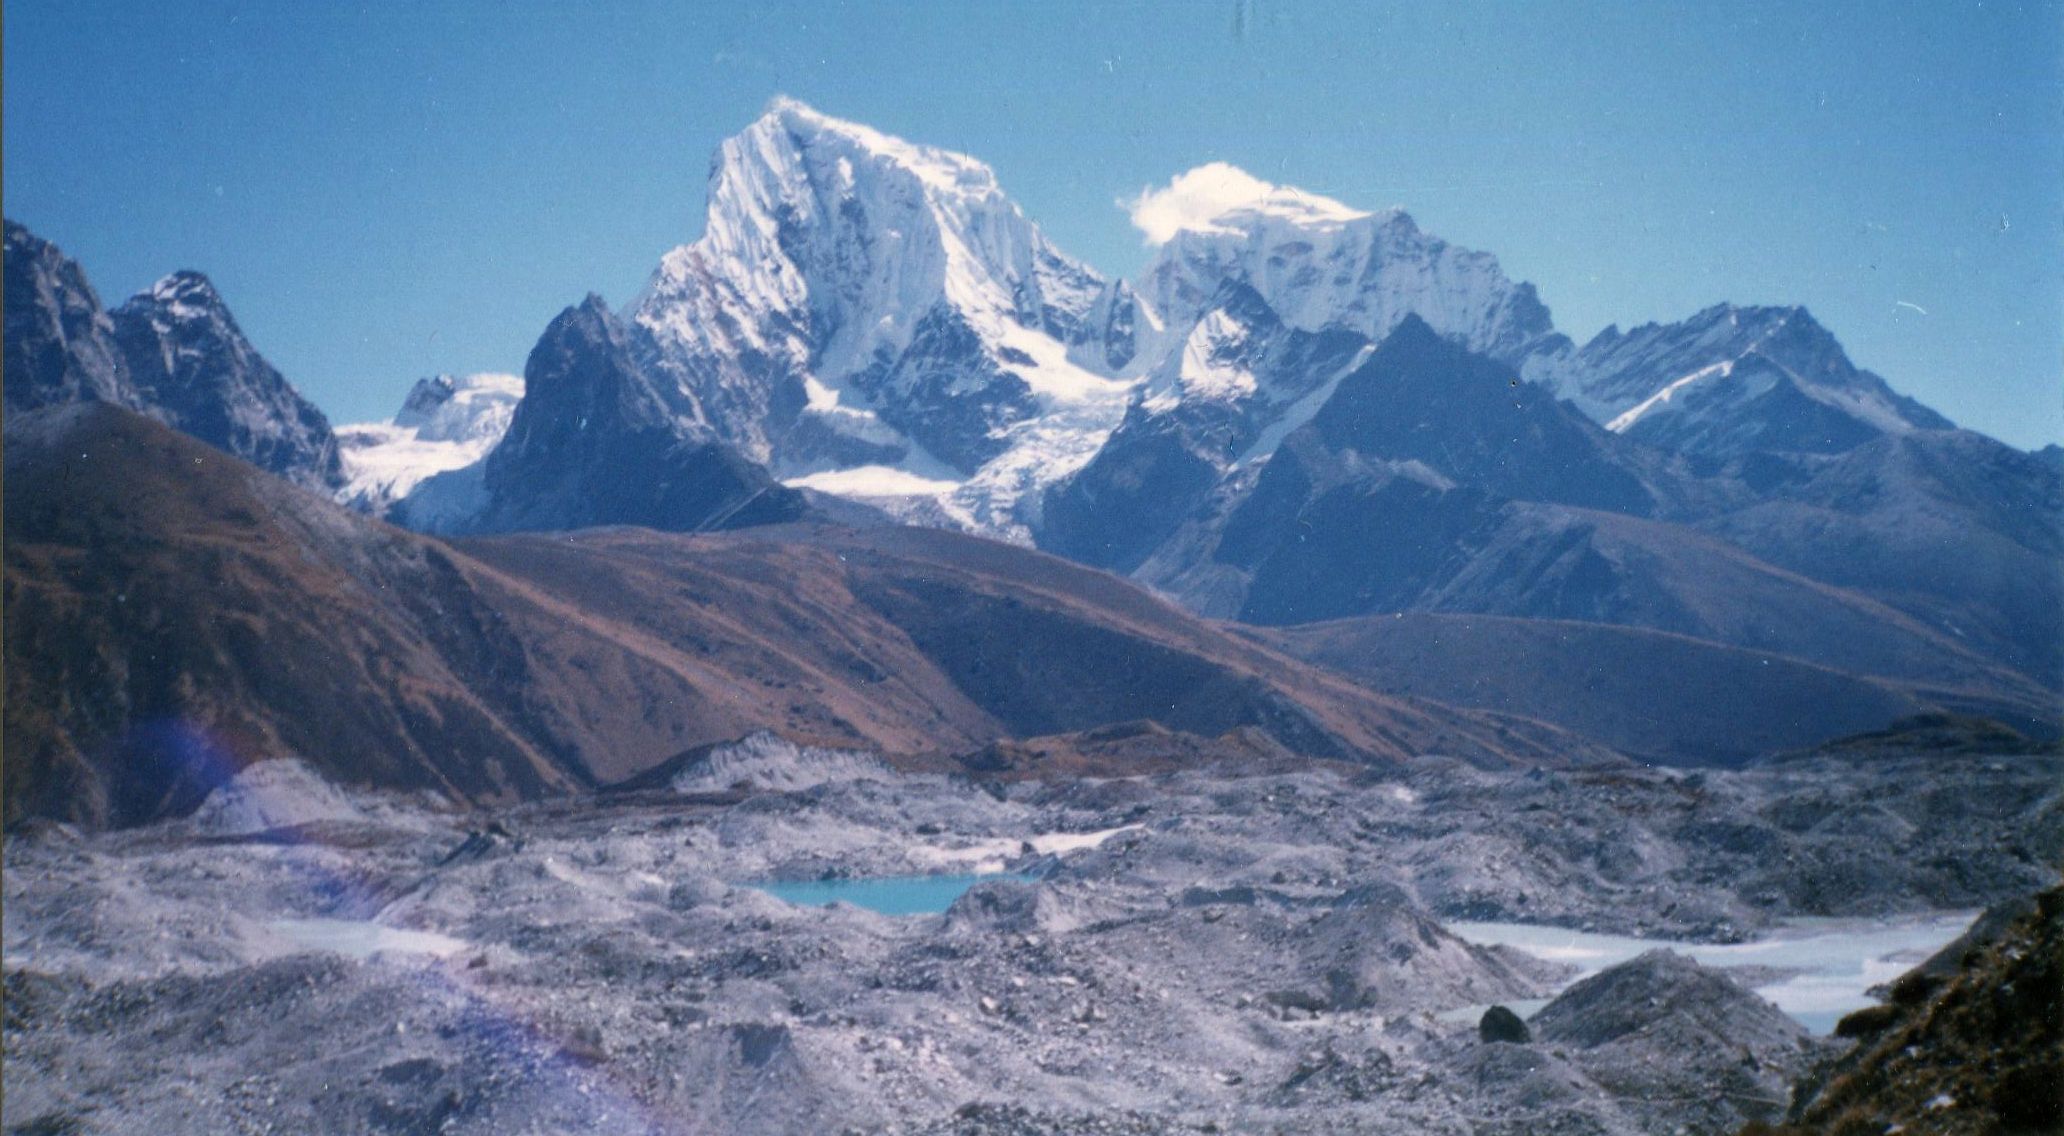 Cholatse and Taboche above  Ngozumpa Glacier on route to Gokyo